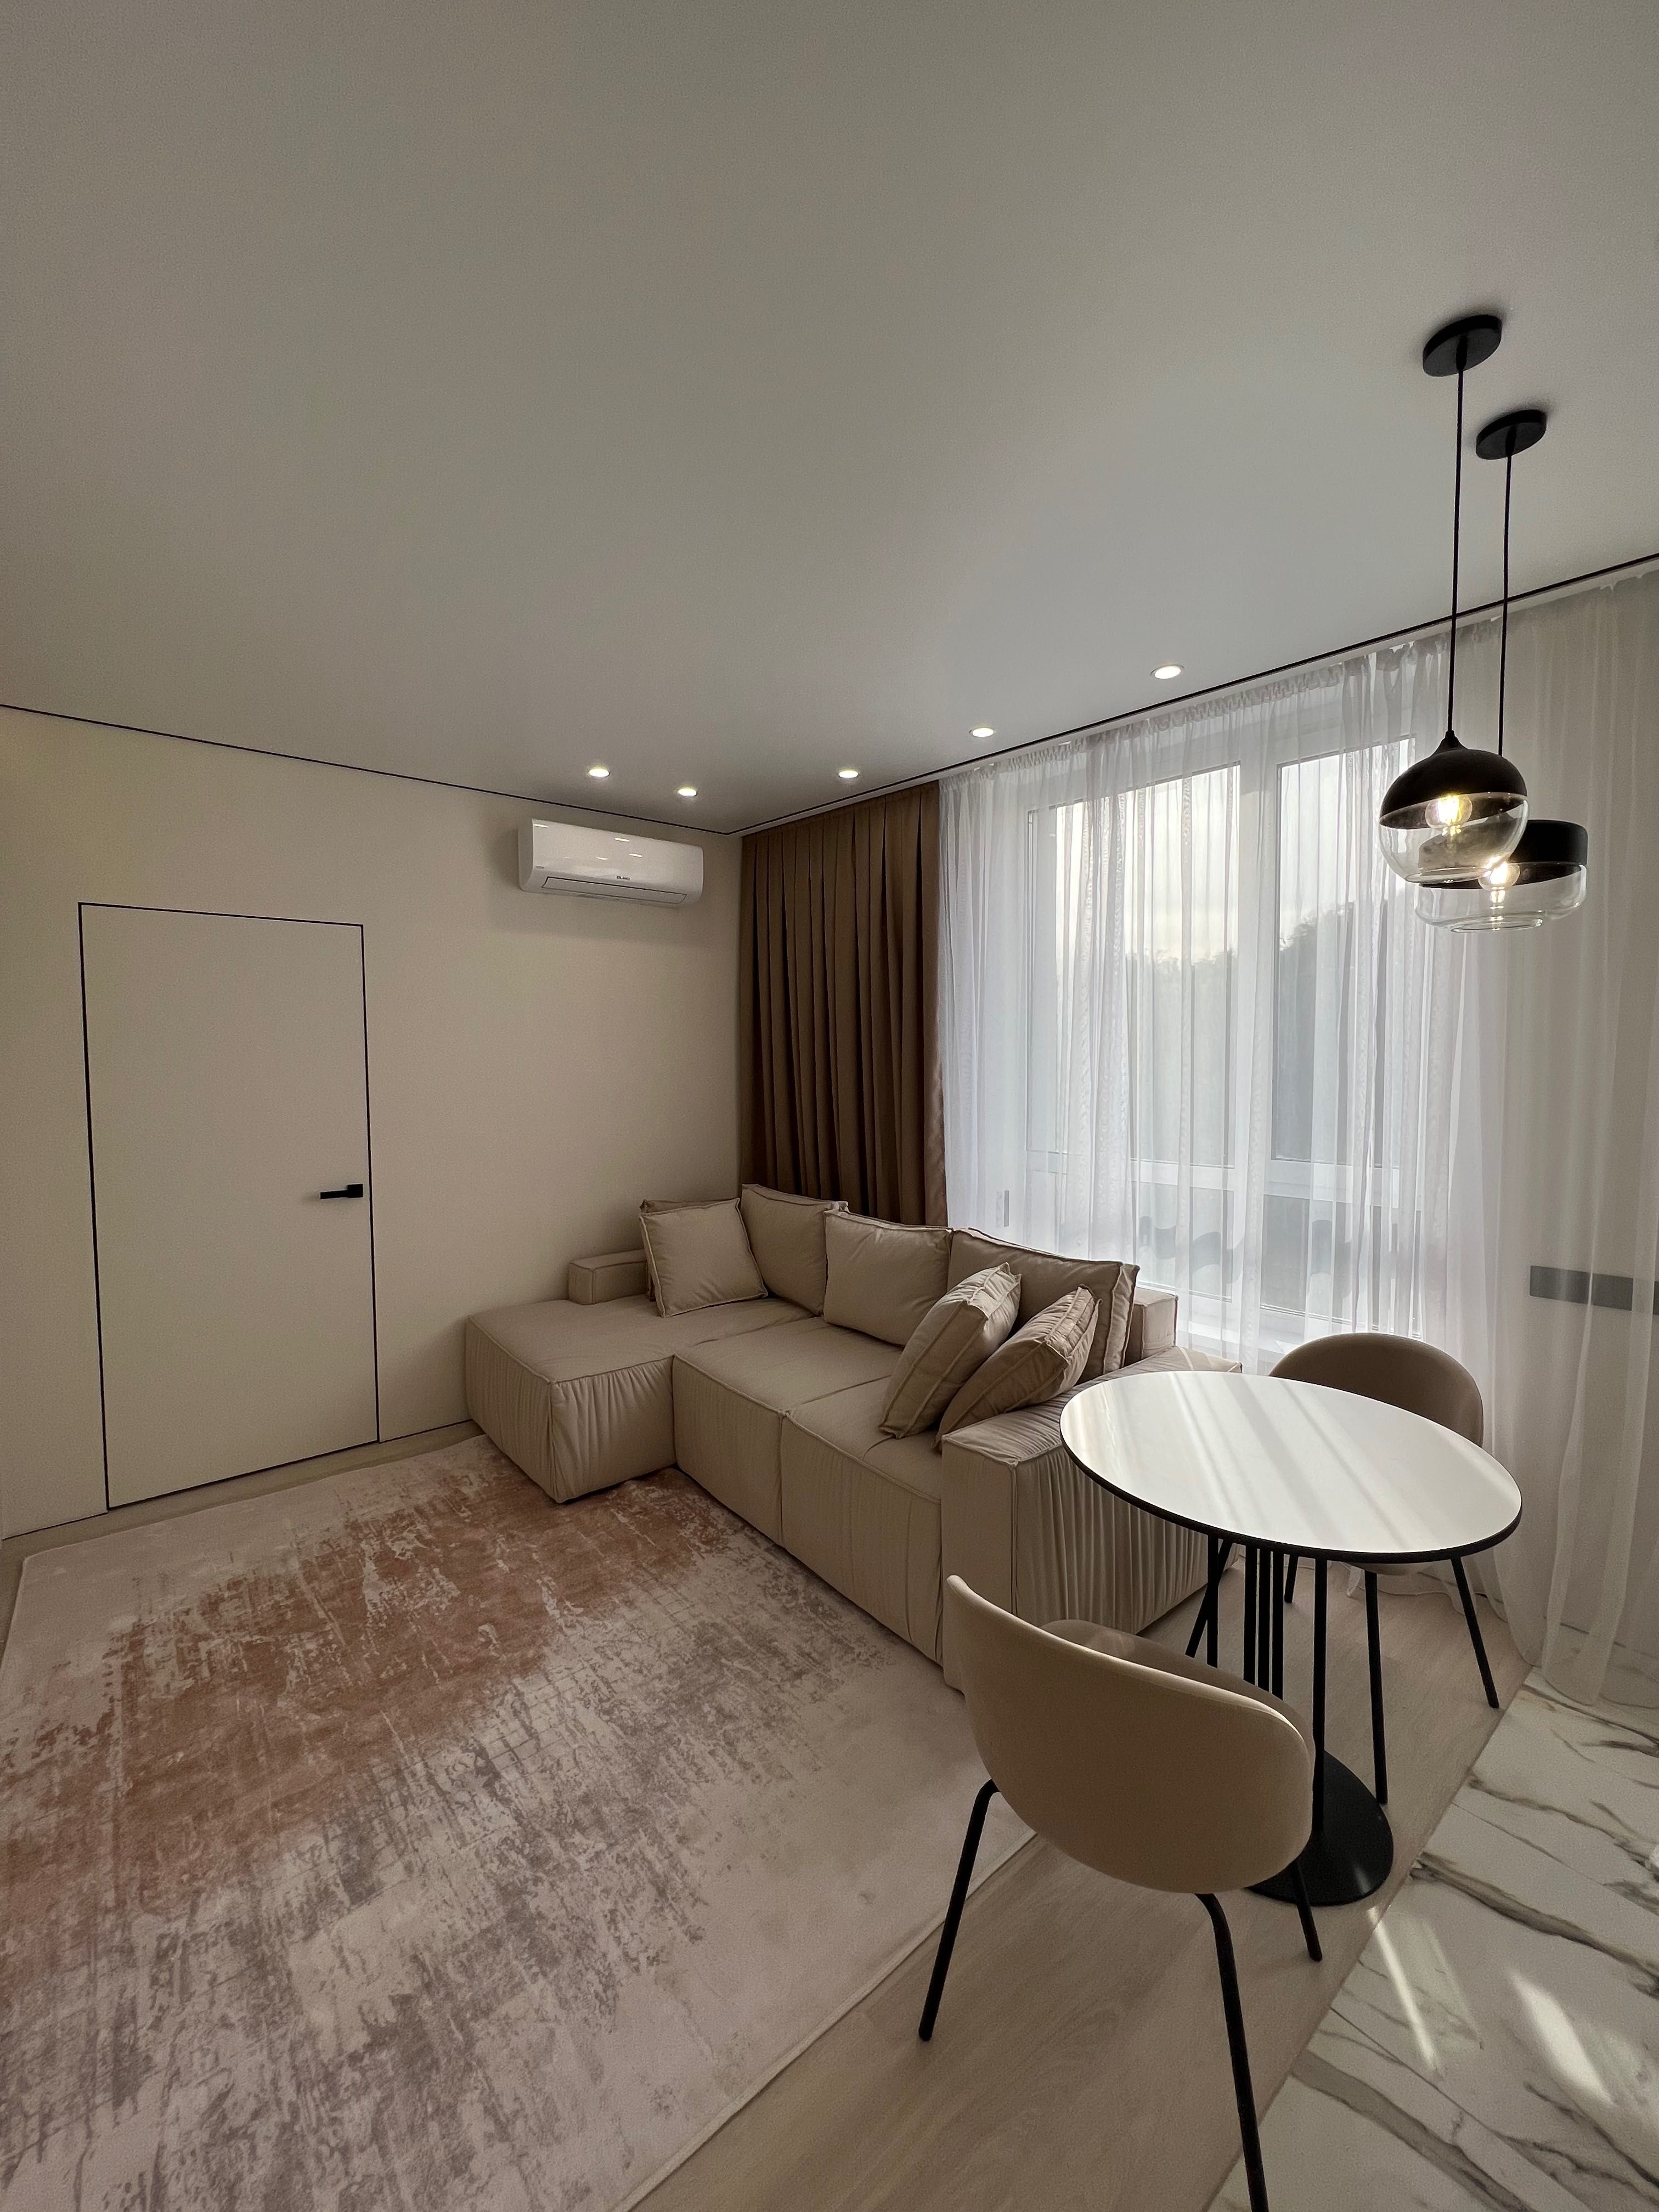 НОВА квартира ЖК "Svitlo Park " Столичне шосе 3.  Master bedroom